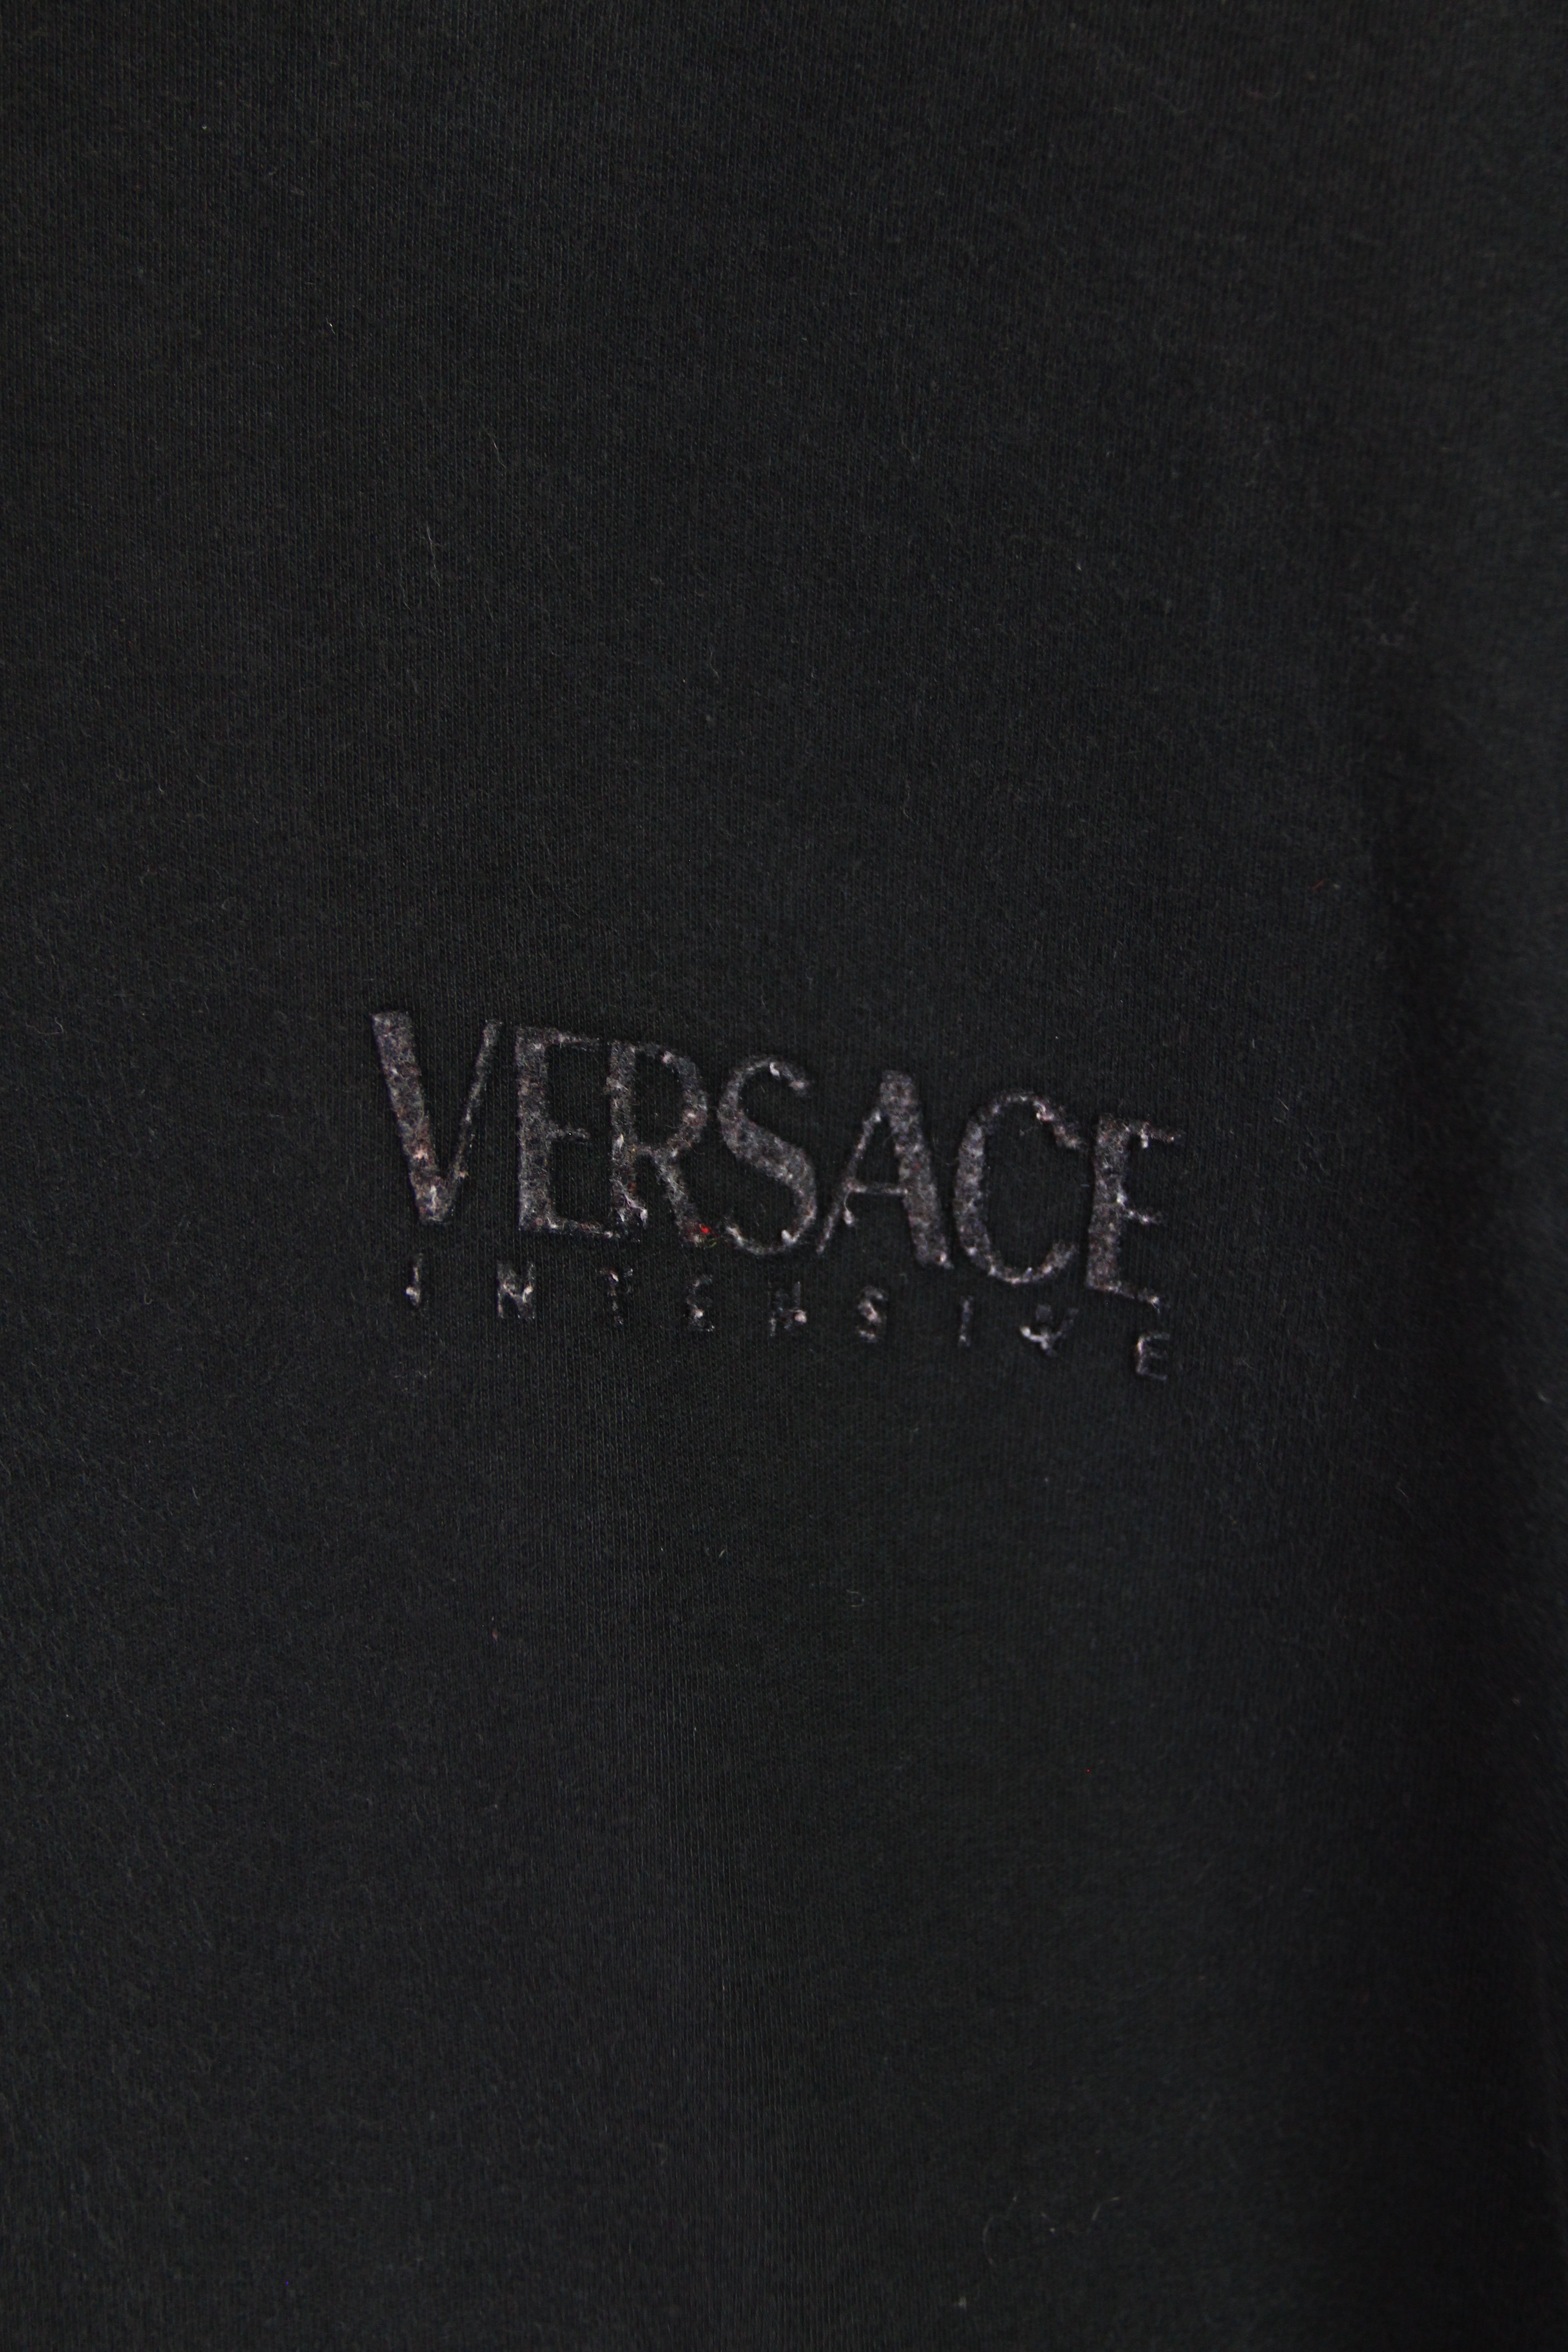 Long sleeve Versace (M)